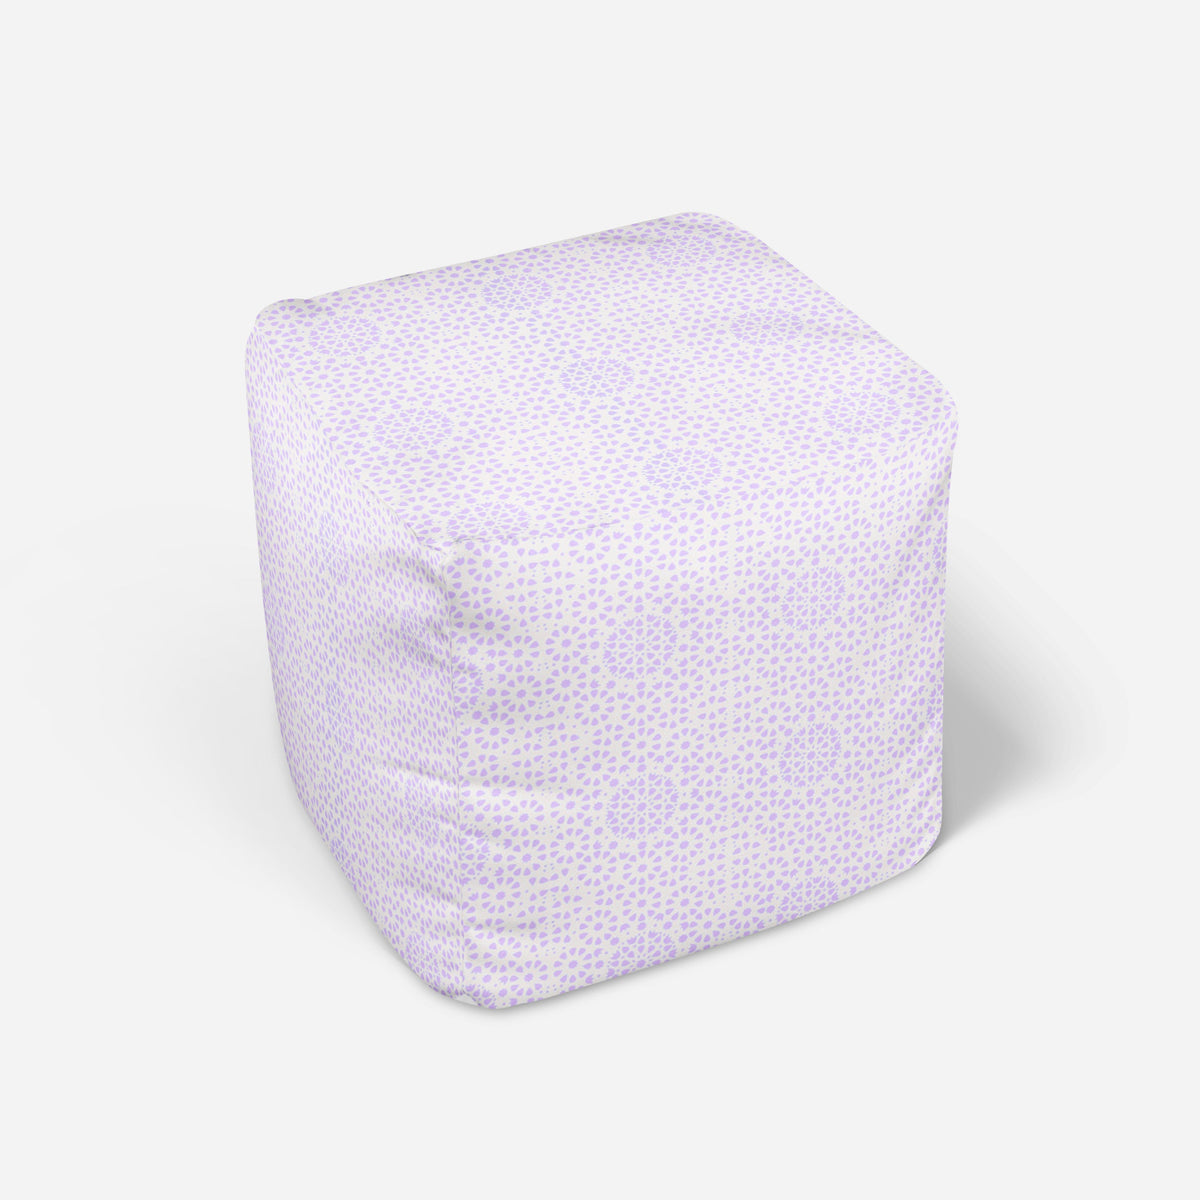 Bean Bag Cube - Charlotte Lilac Shop All MWW 